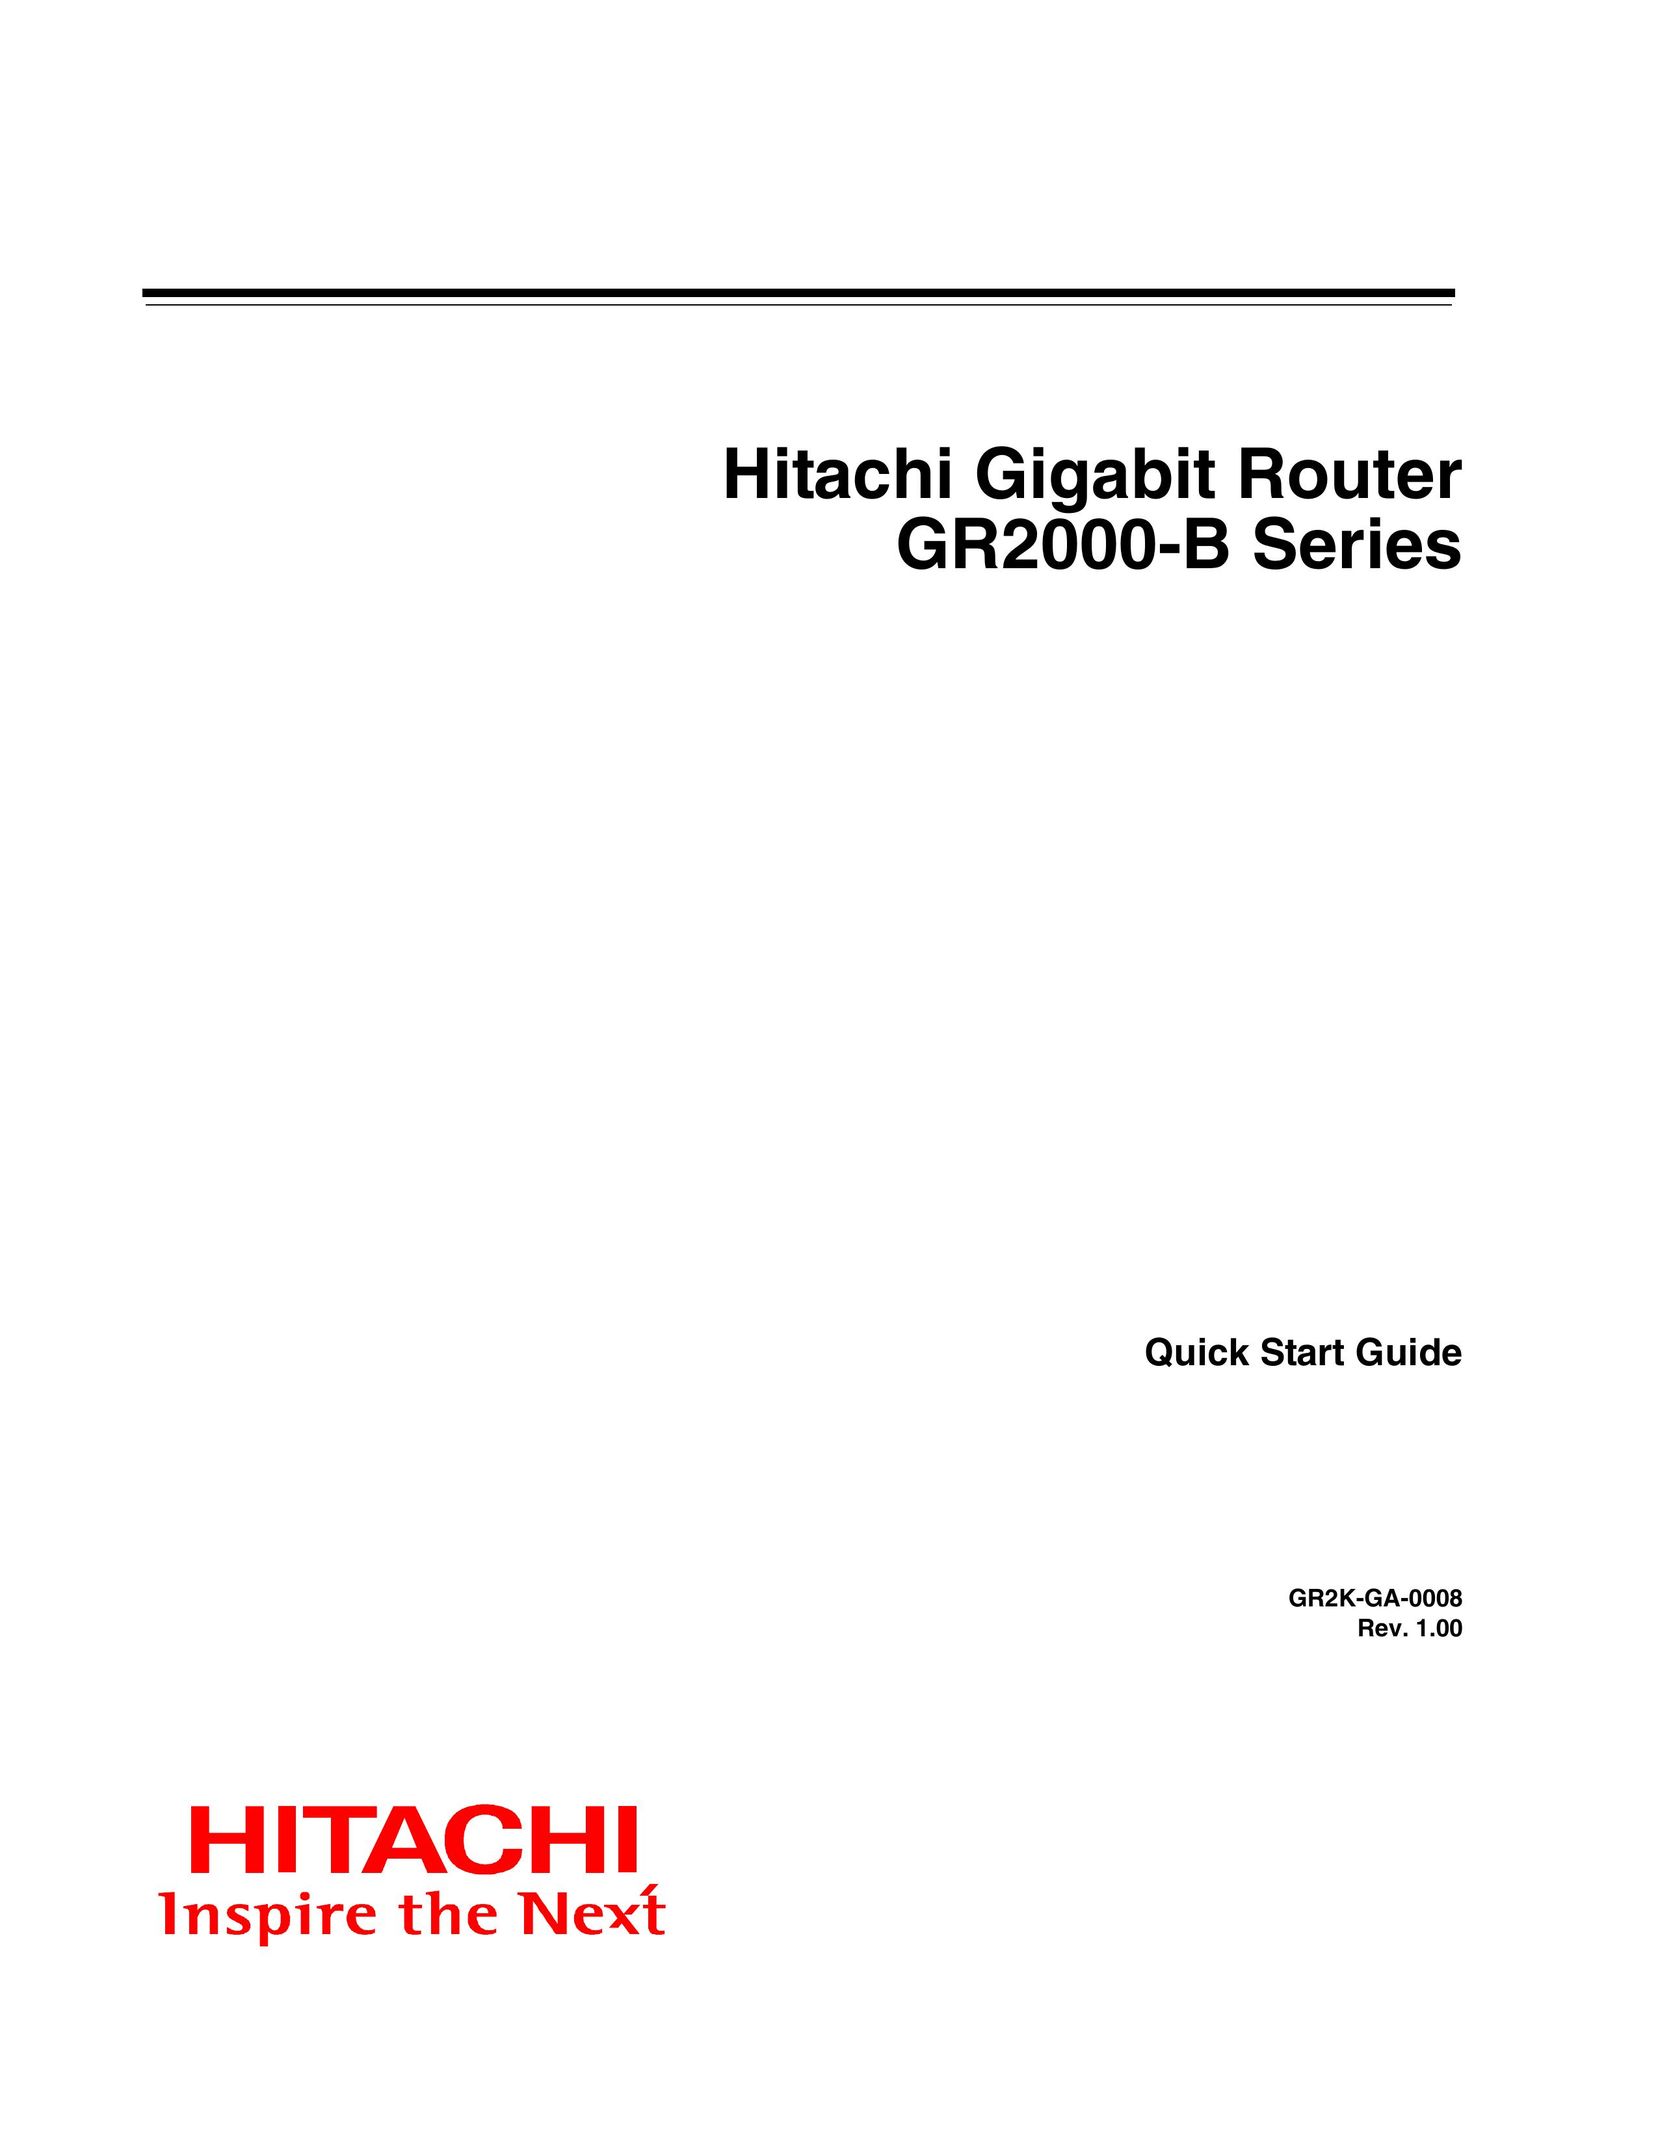 Hitachi GR2000-B Series Network Router User Manual